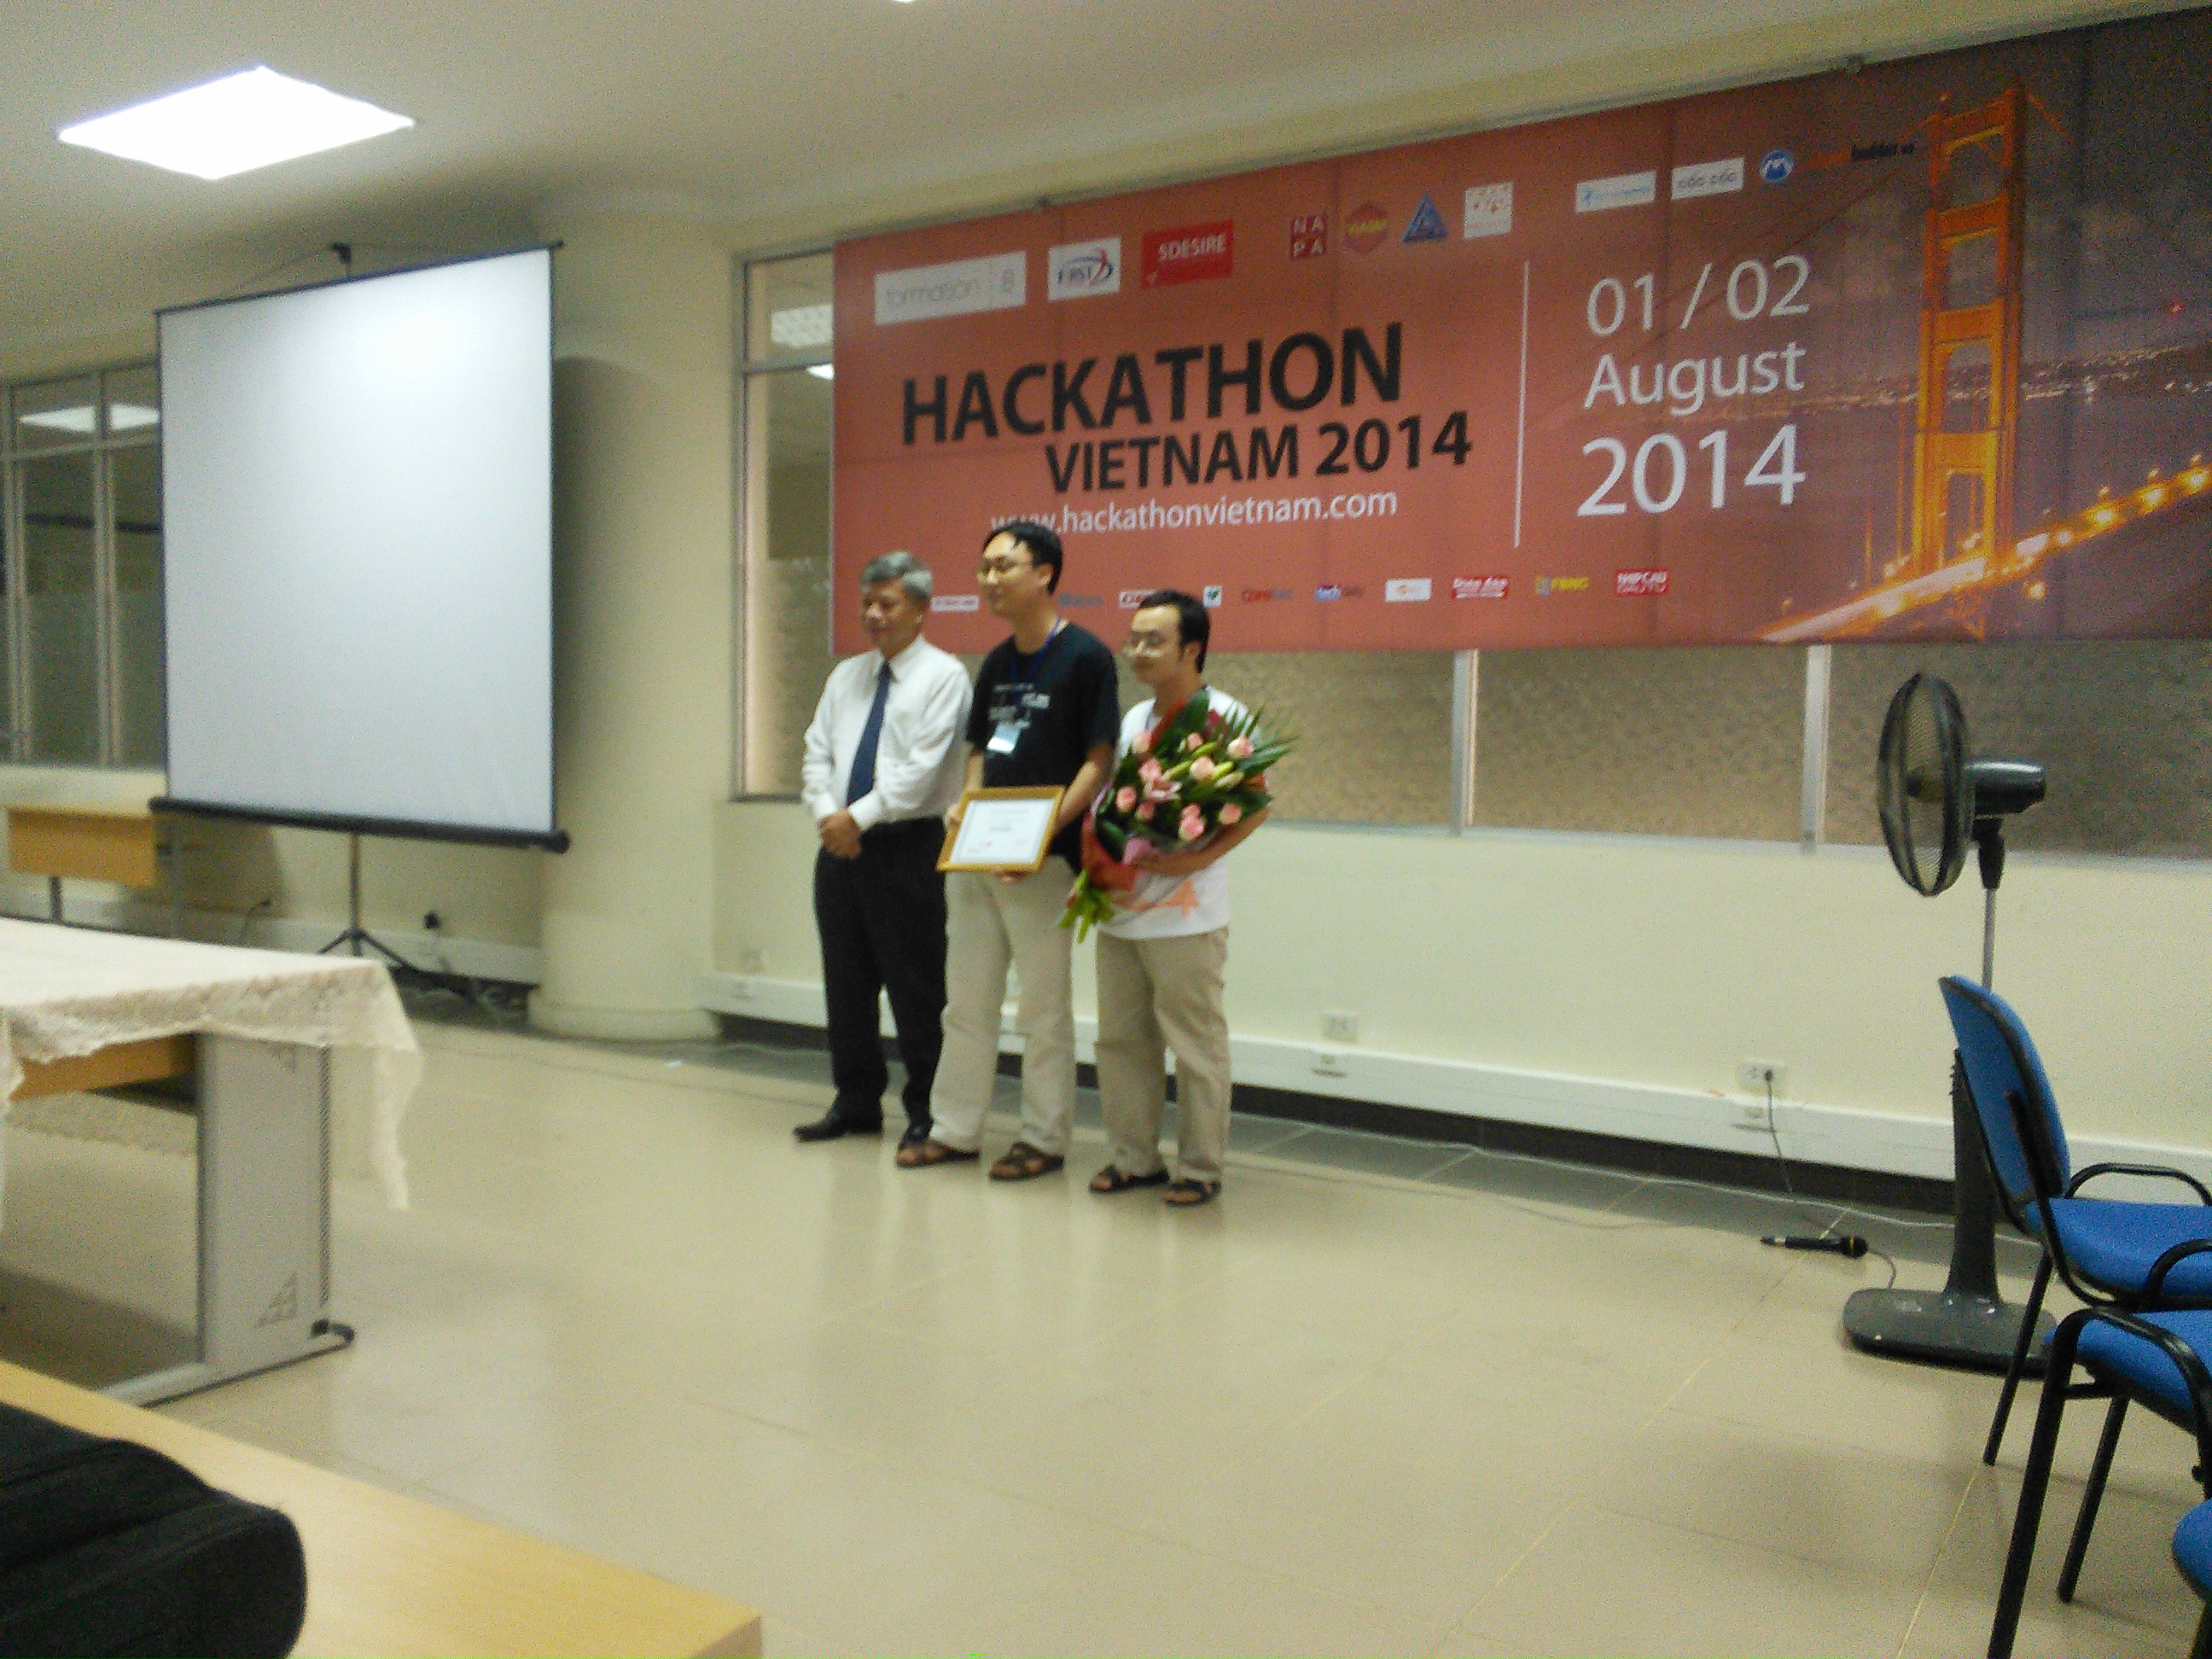 Dotohソフトのグェン　ドゥク　タム　ソフトウェアアーキテクトがHackathon Vietnam 2014優勝